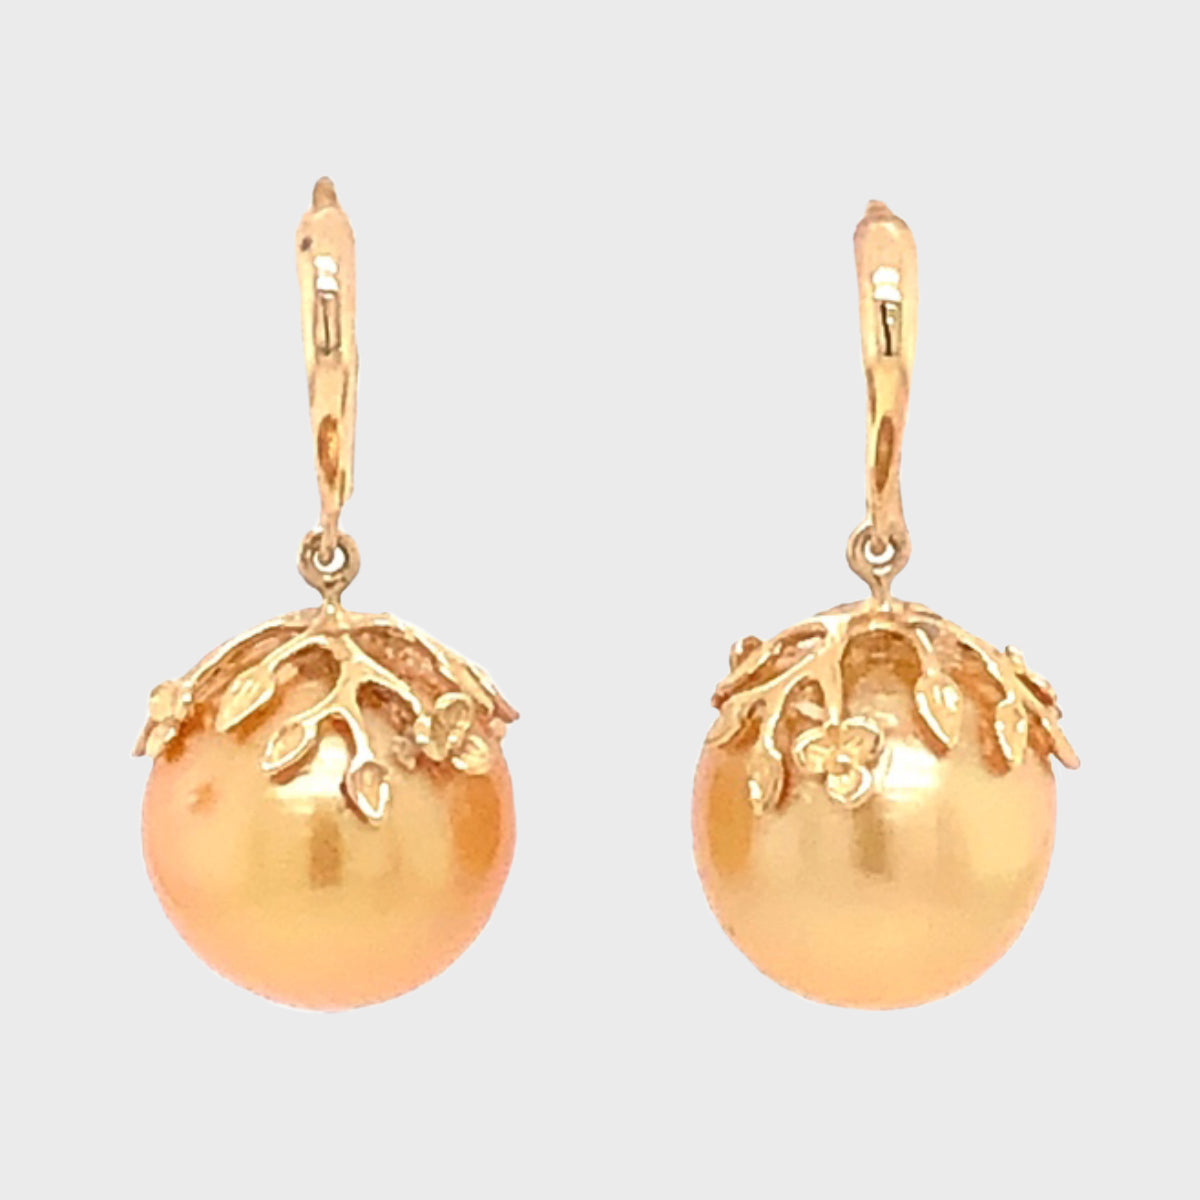 Dangled Vines, Golden South Sea Pearl Earrings, Gold